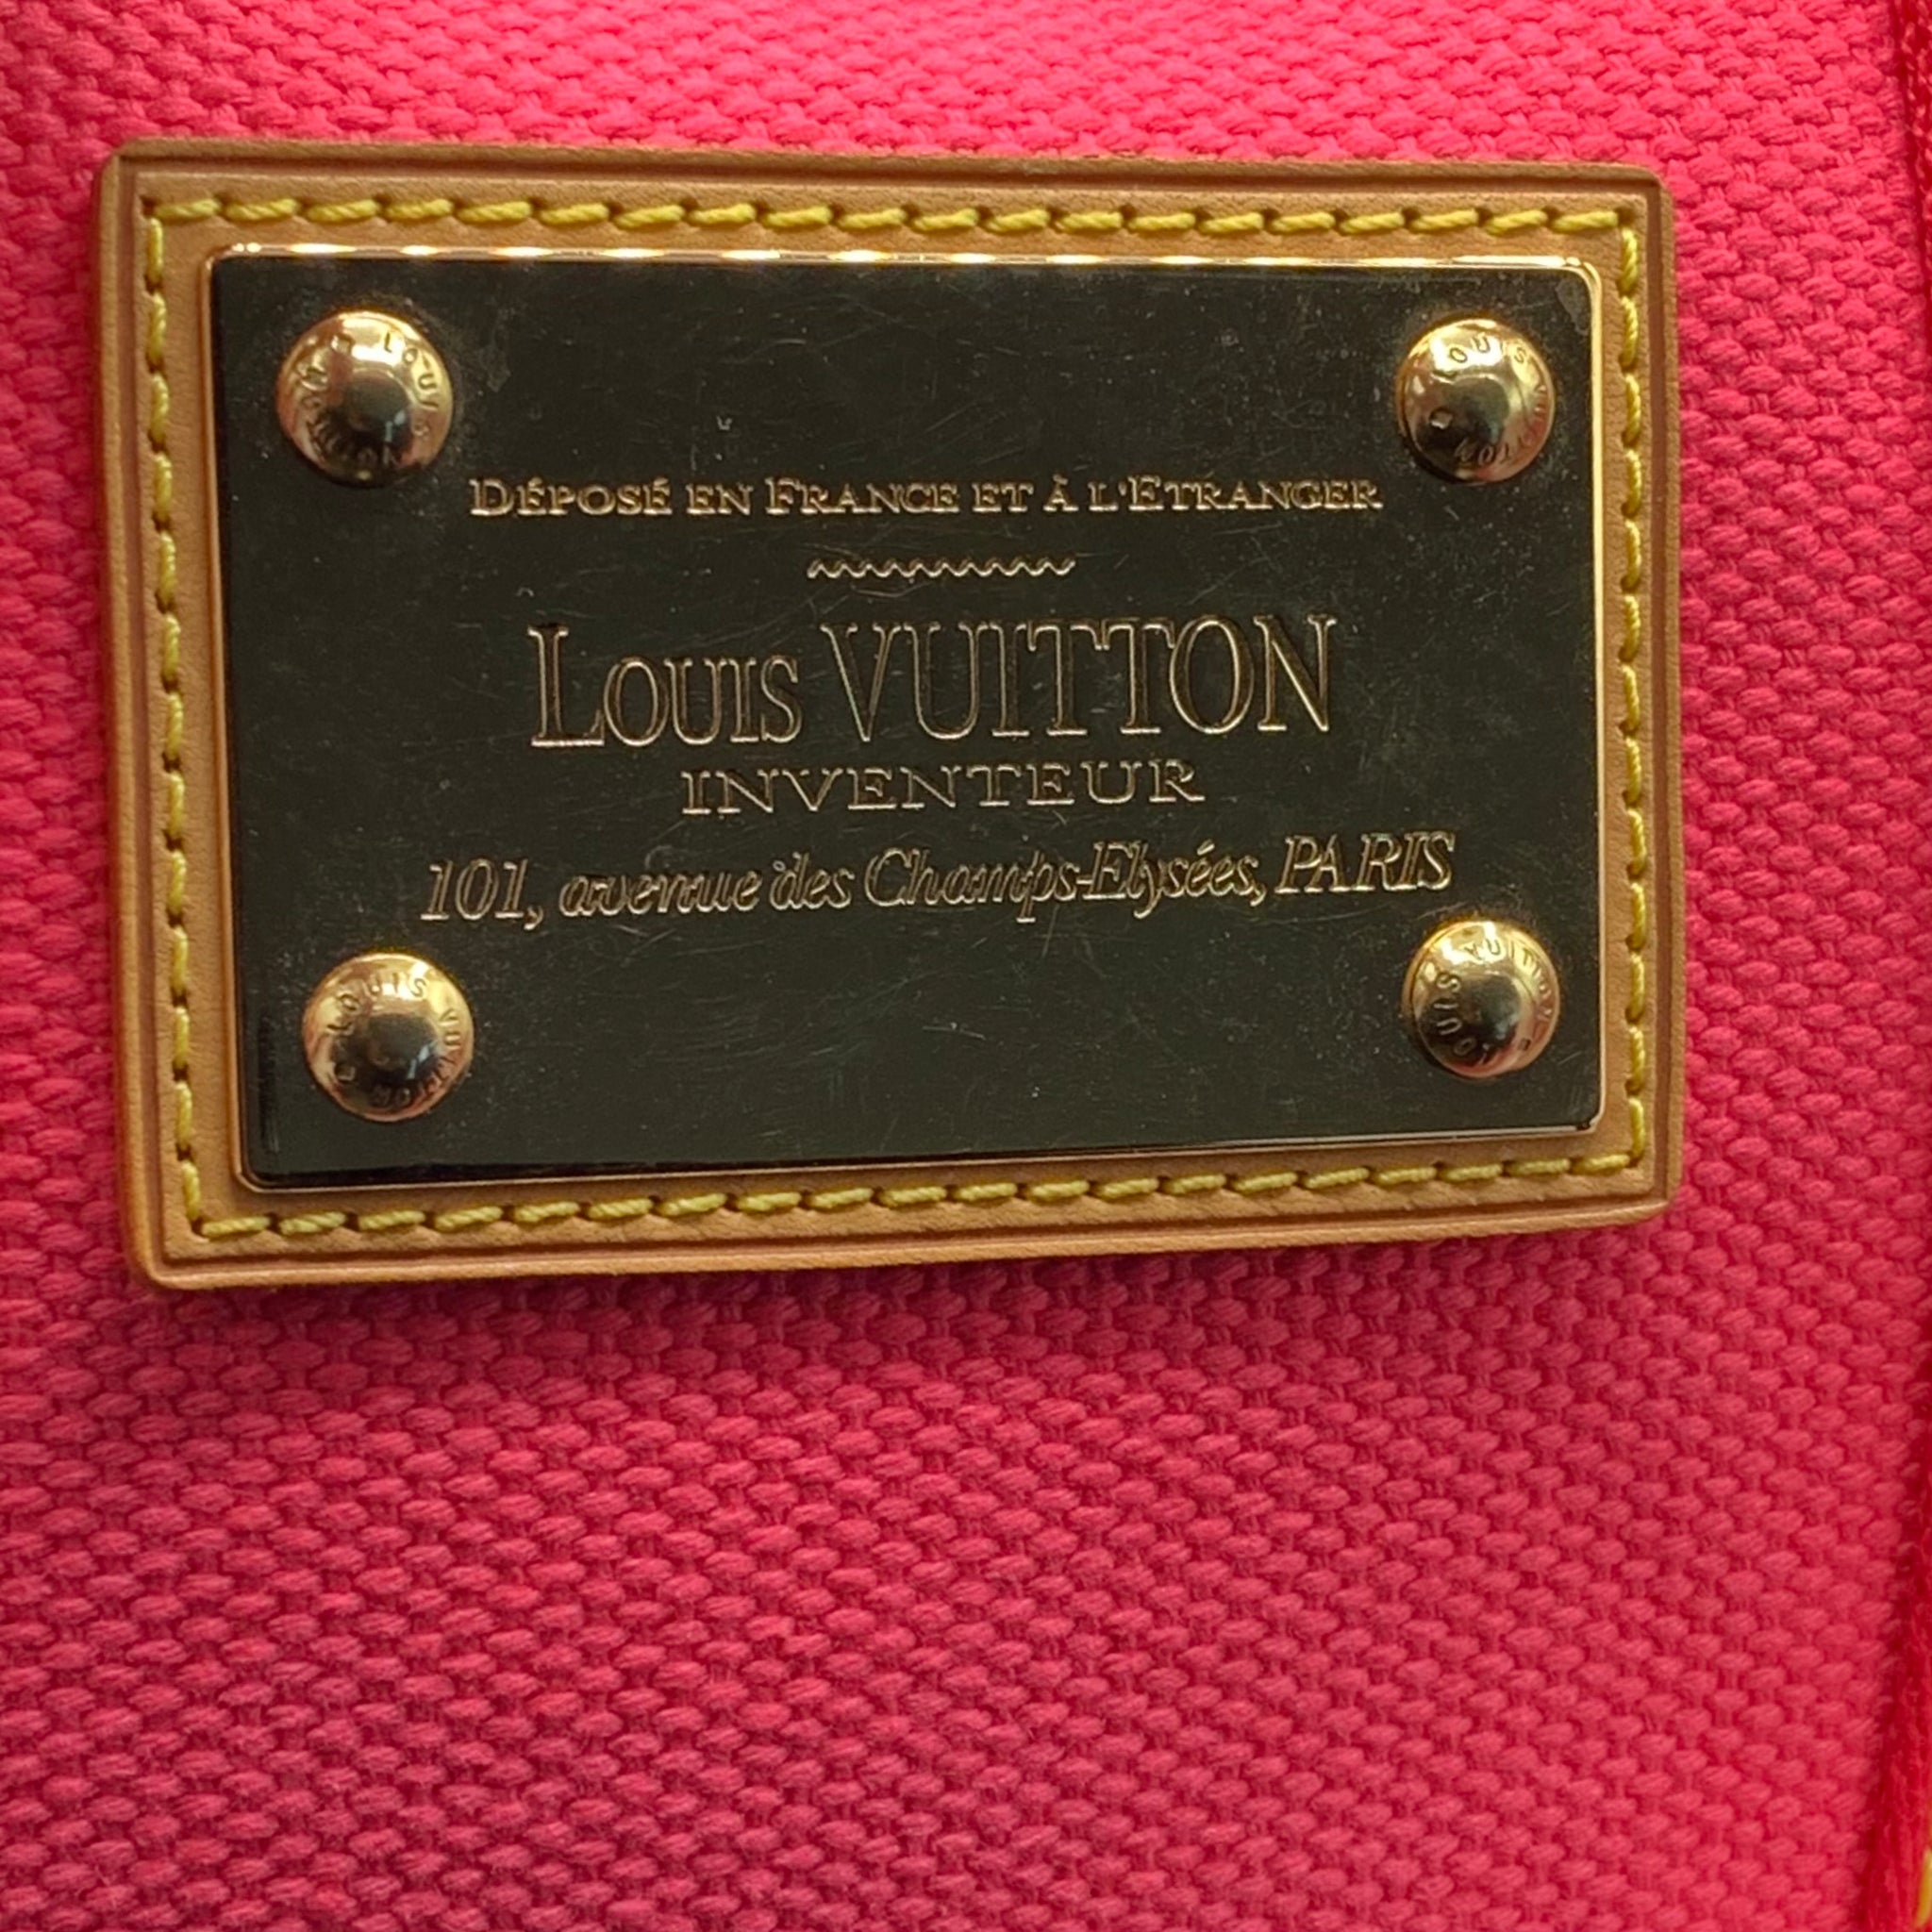 Louis Vuitton Vintage - Antigua Cabas PM Bag - Blue Black - Canvas and  Leather Handbag - Luxury High Quality - Avvenice